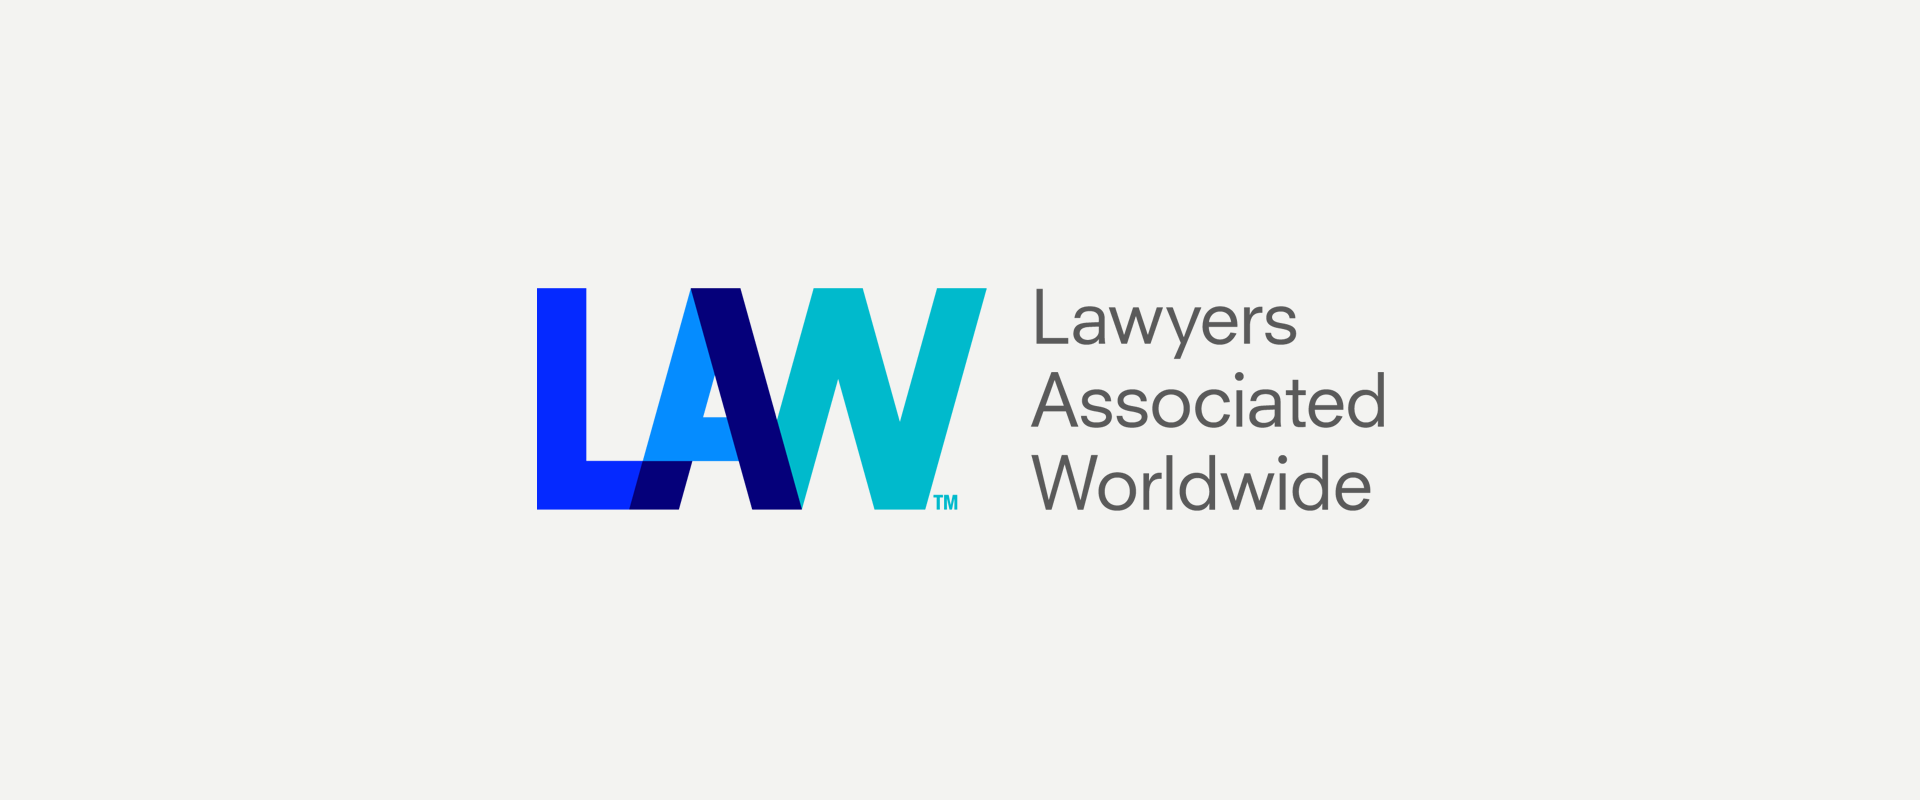 Media item displaying Lawyers Associated Worldwide